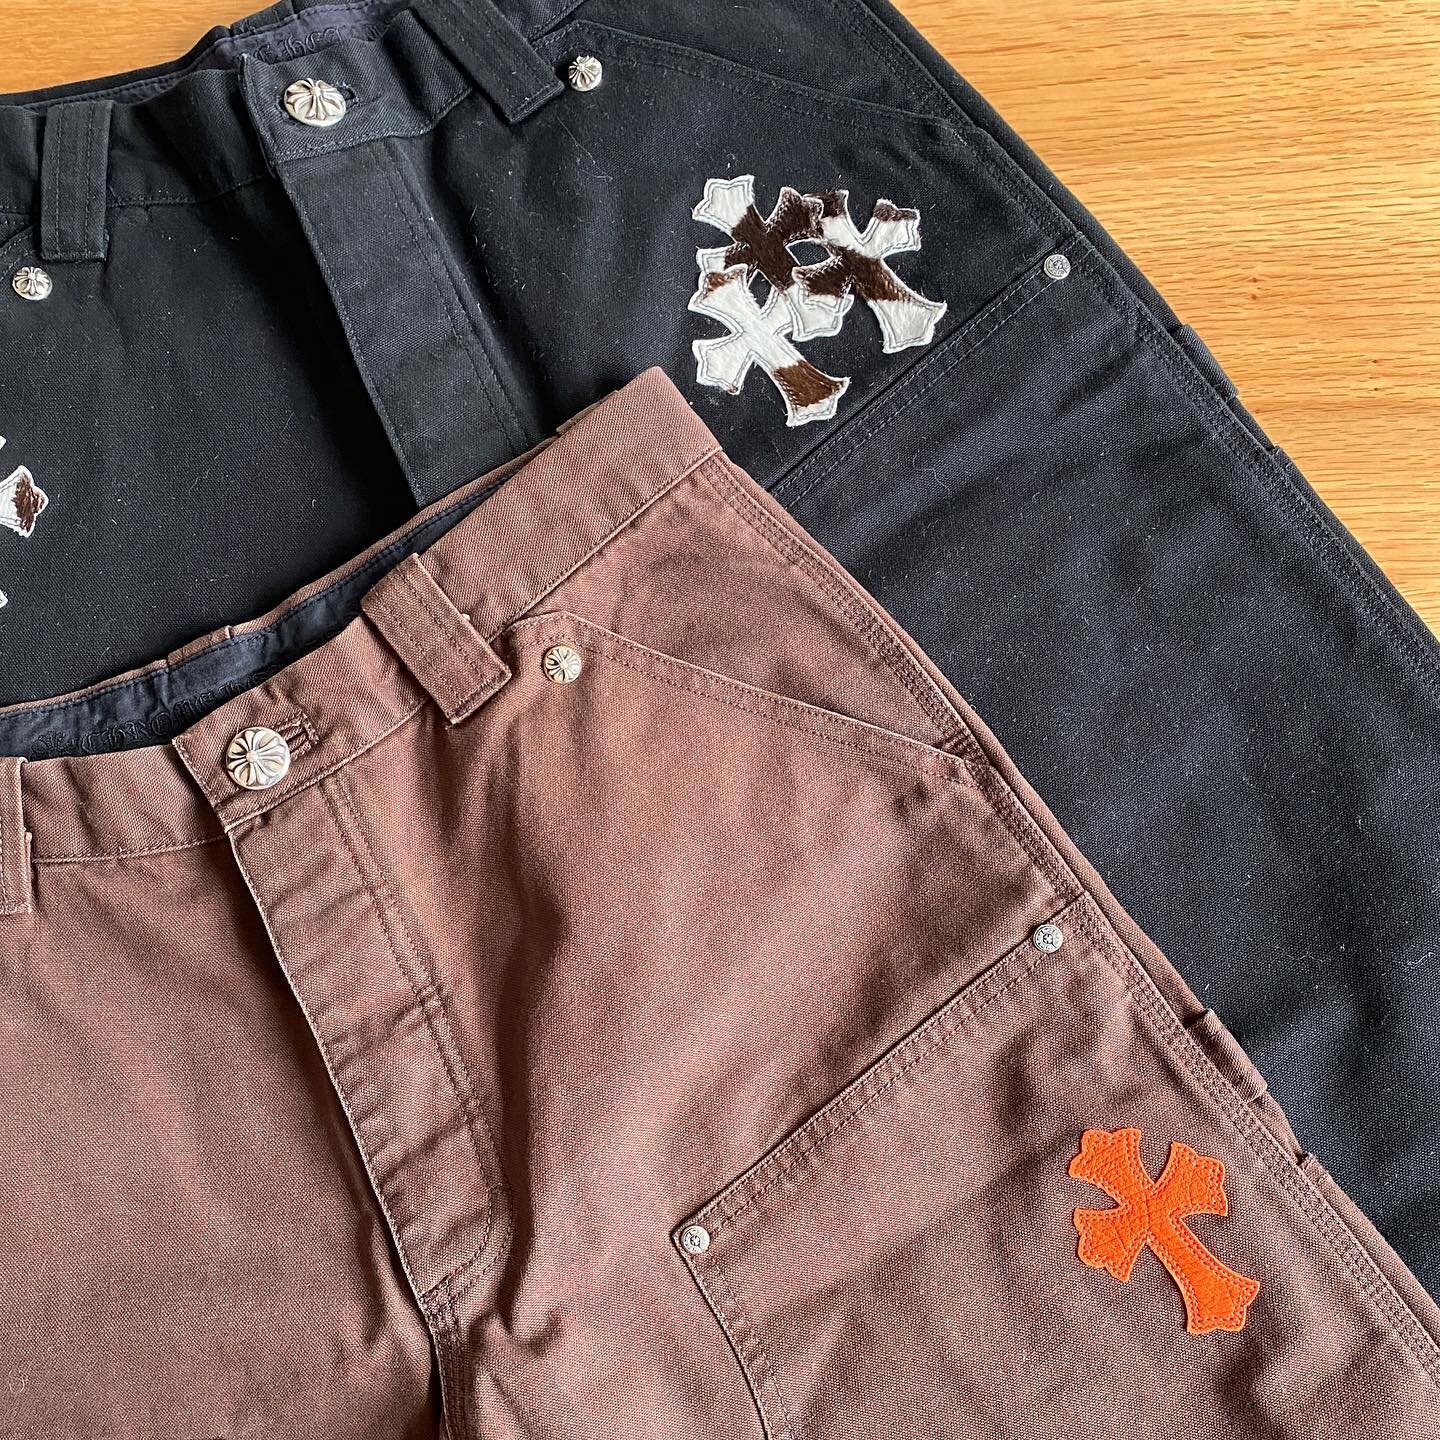 chrome hearts 1/1 carpenter pants available now. #markedeu